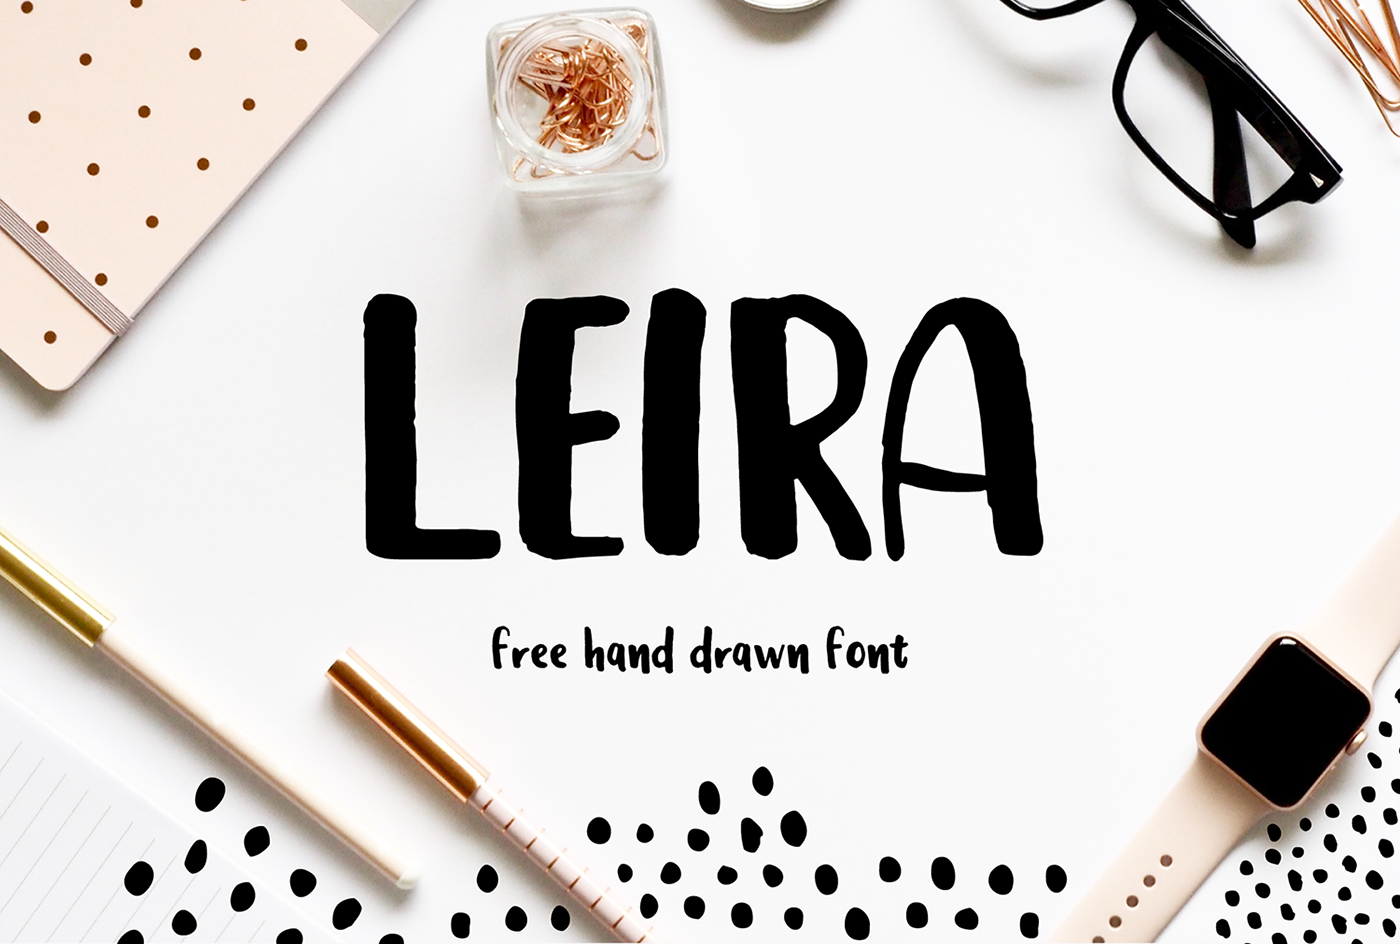 Leira Free Handdrawn Brush Font